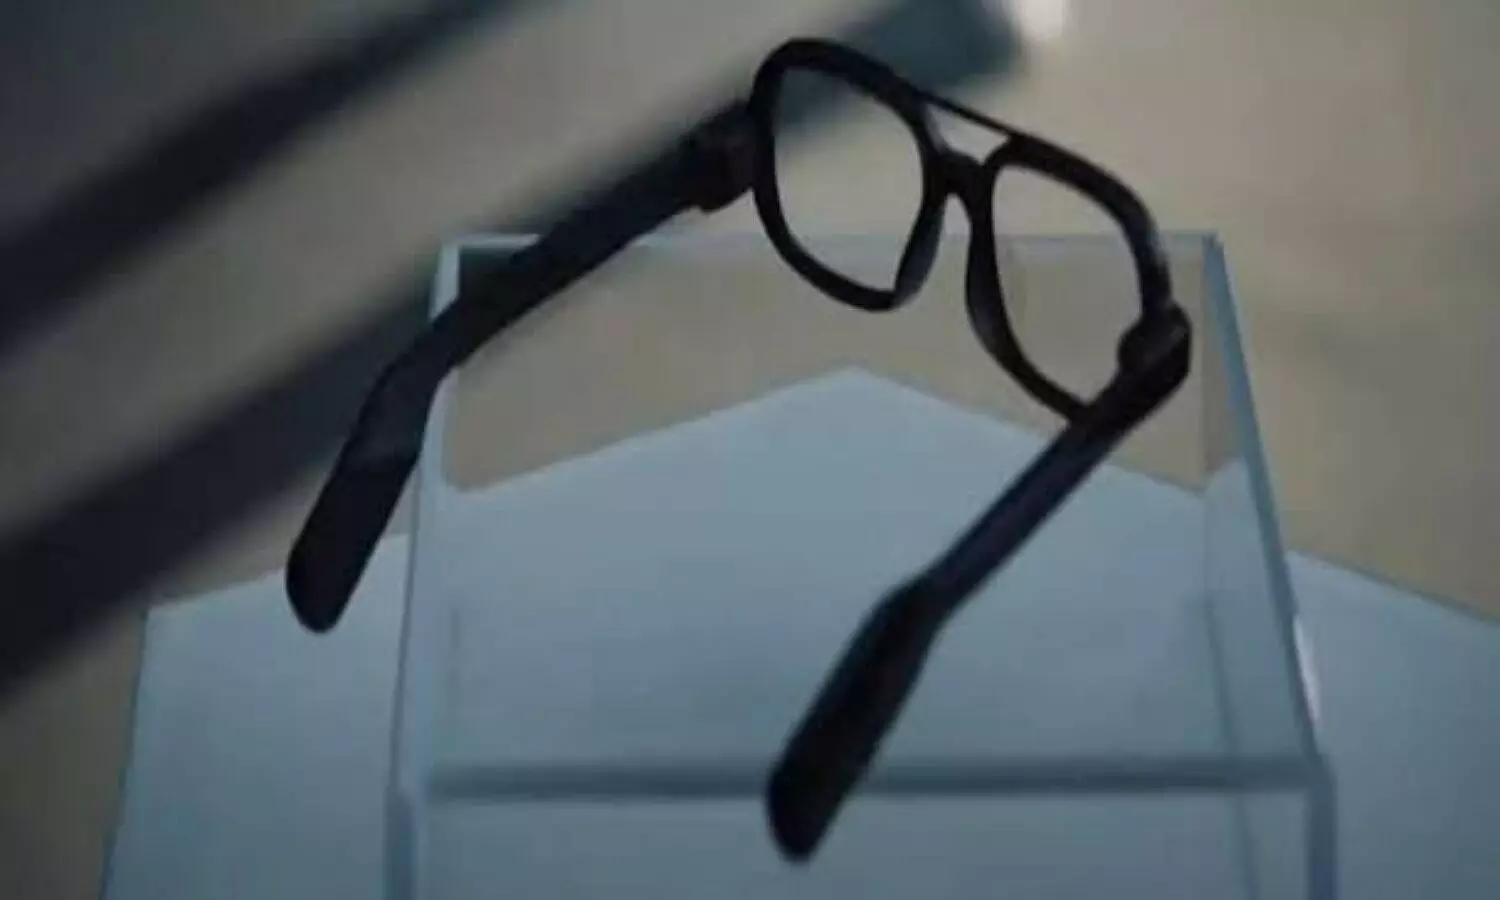 Huawai Smart Glasses: